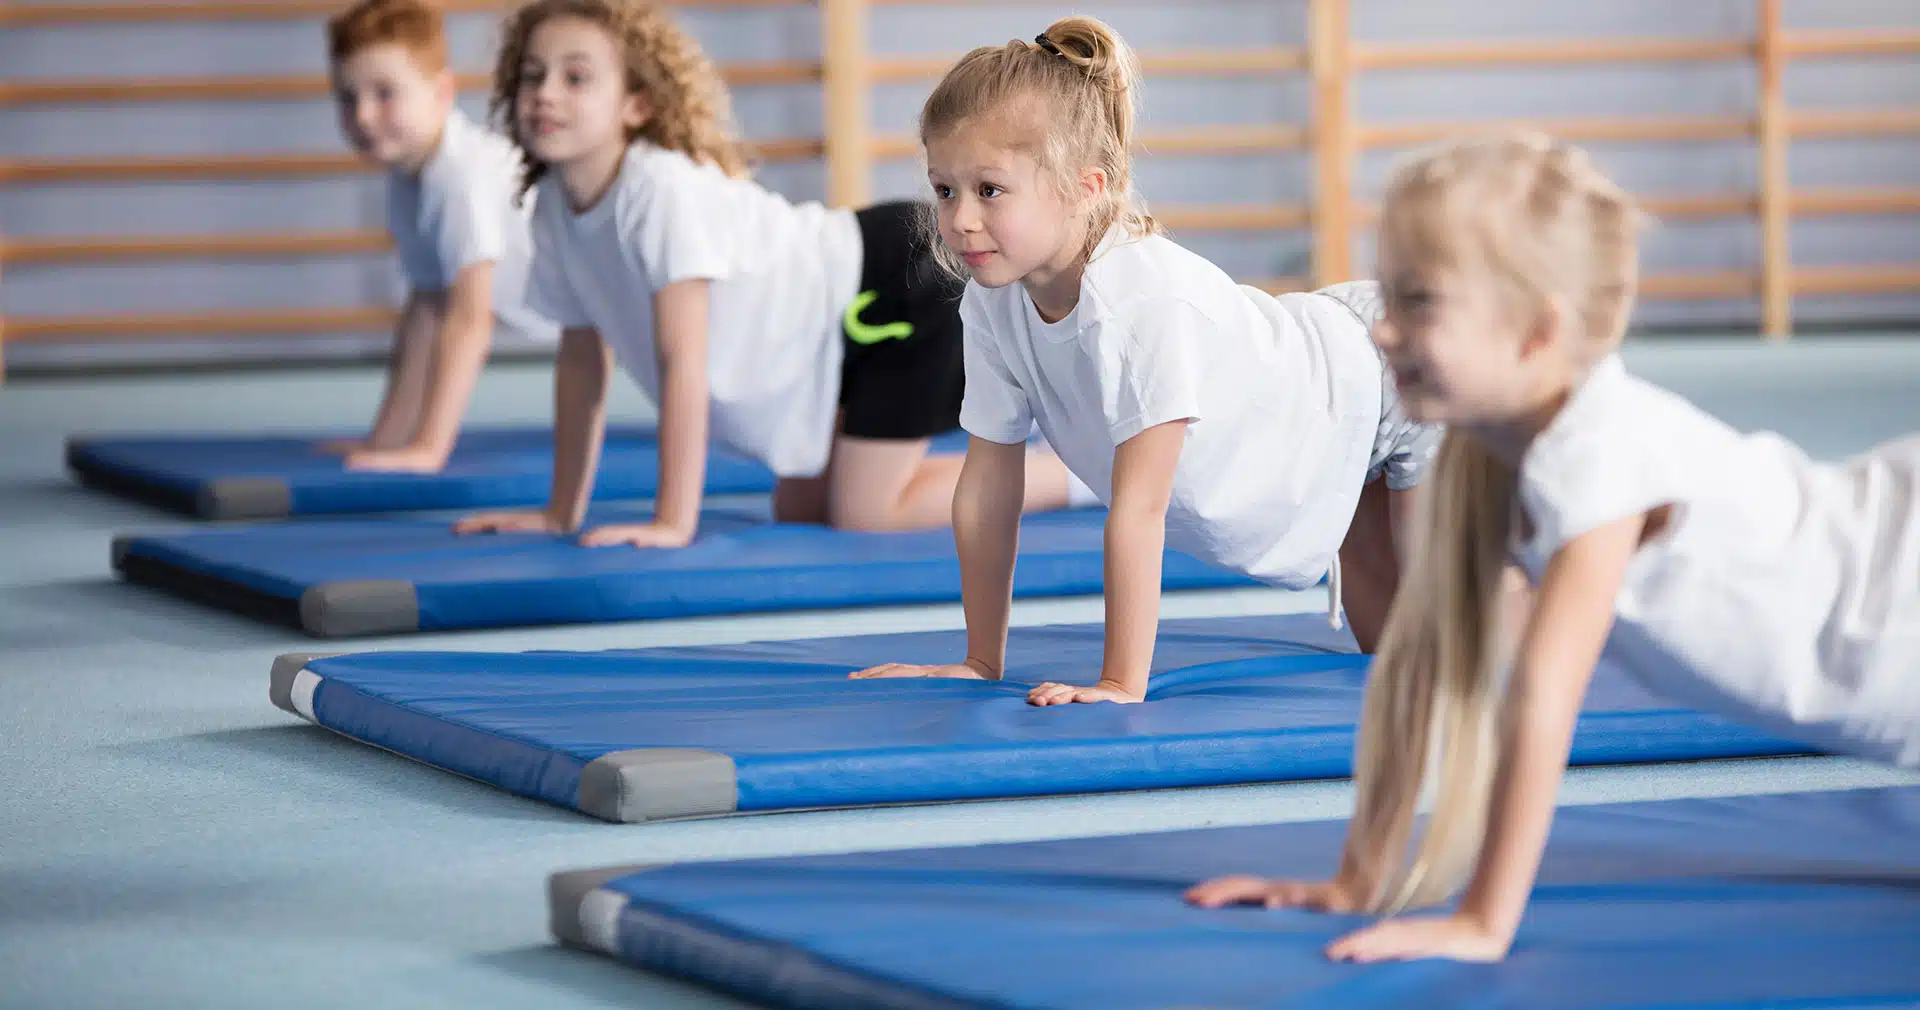 Four kids in gymnastics class on floor mats